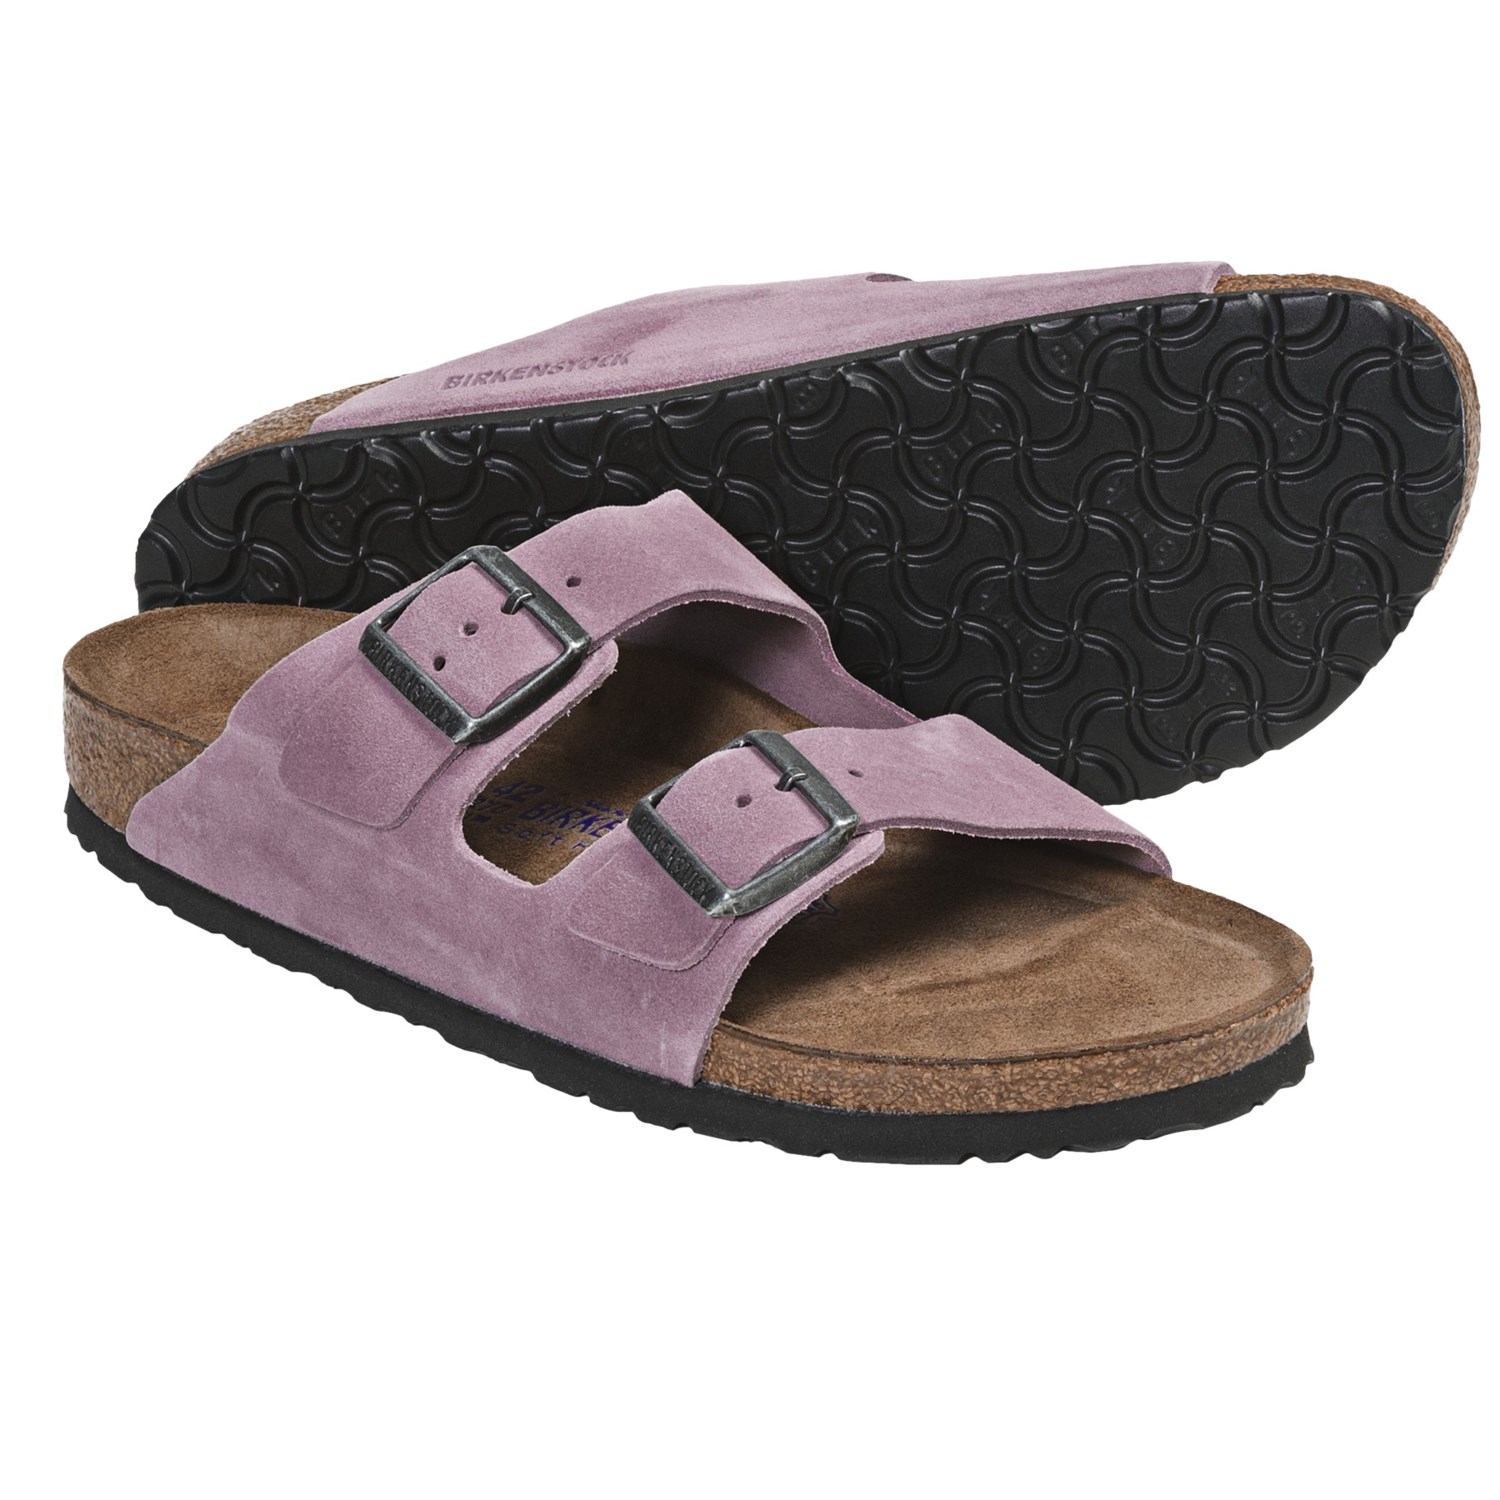 Birkenstock Arizona Soft Footbed Sandals - Leather (For Men and Women ...